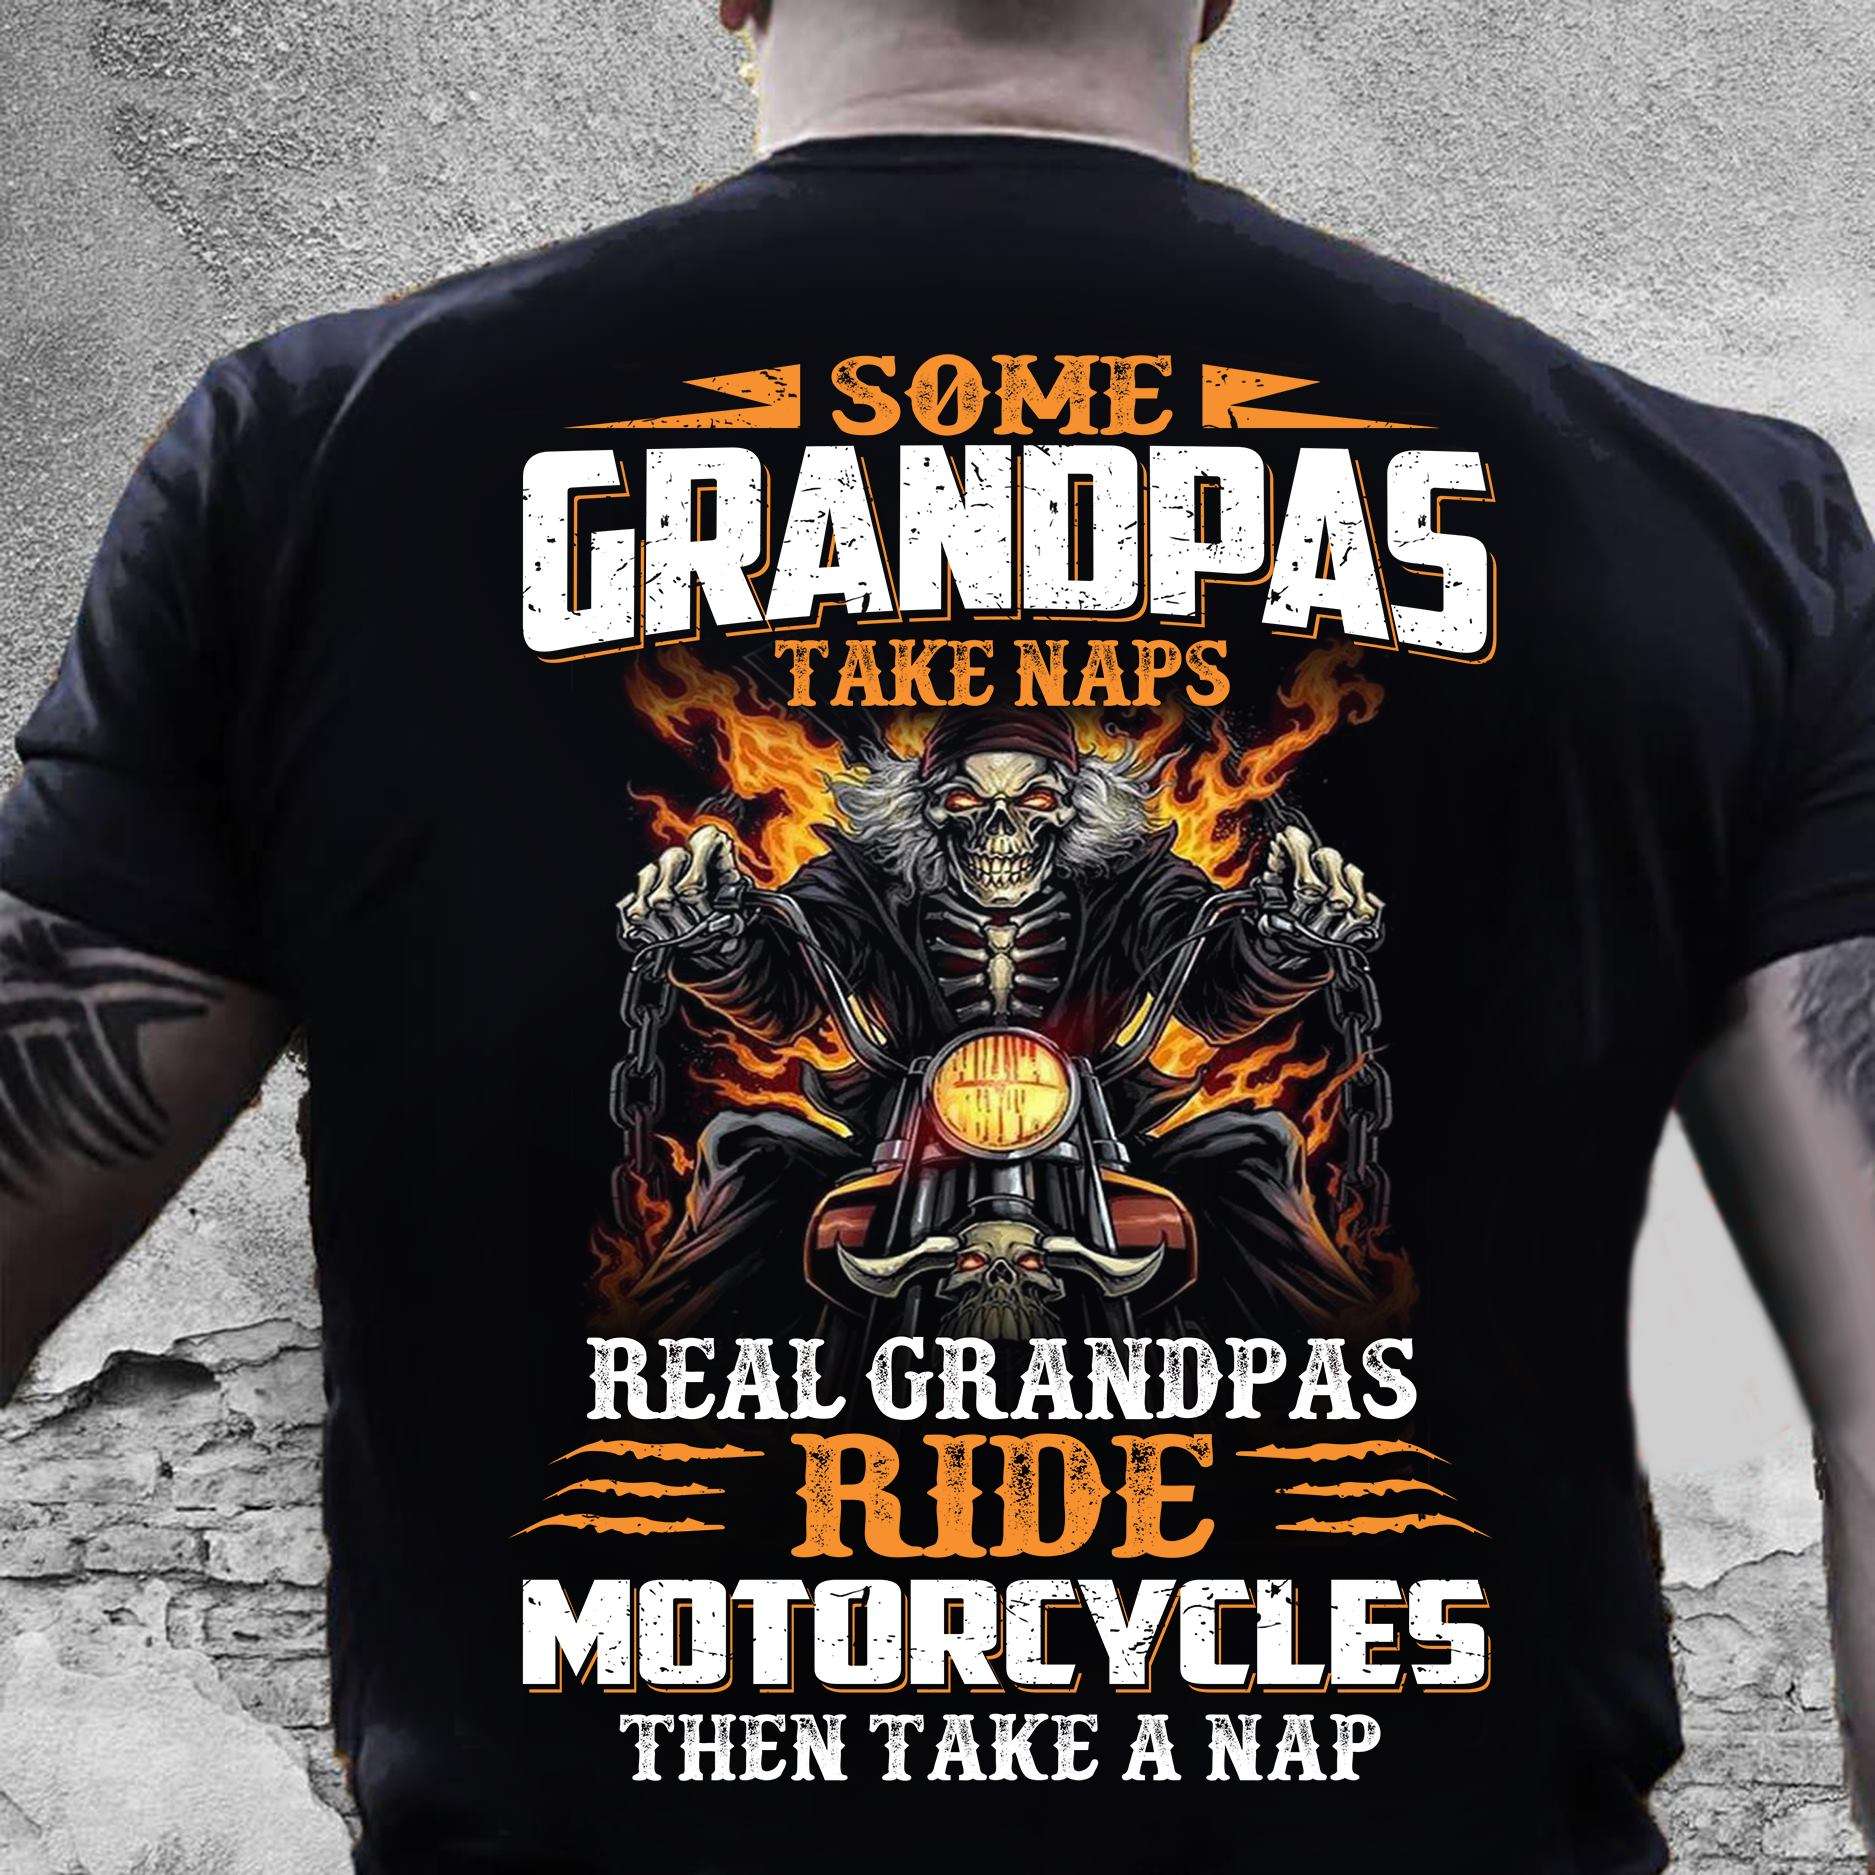 Old Skeleton Riding Motorcycles - Some grandpas take naps real grandpas ride motorcycles then take a nap